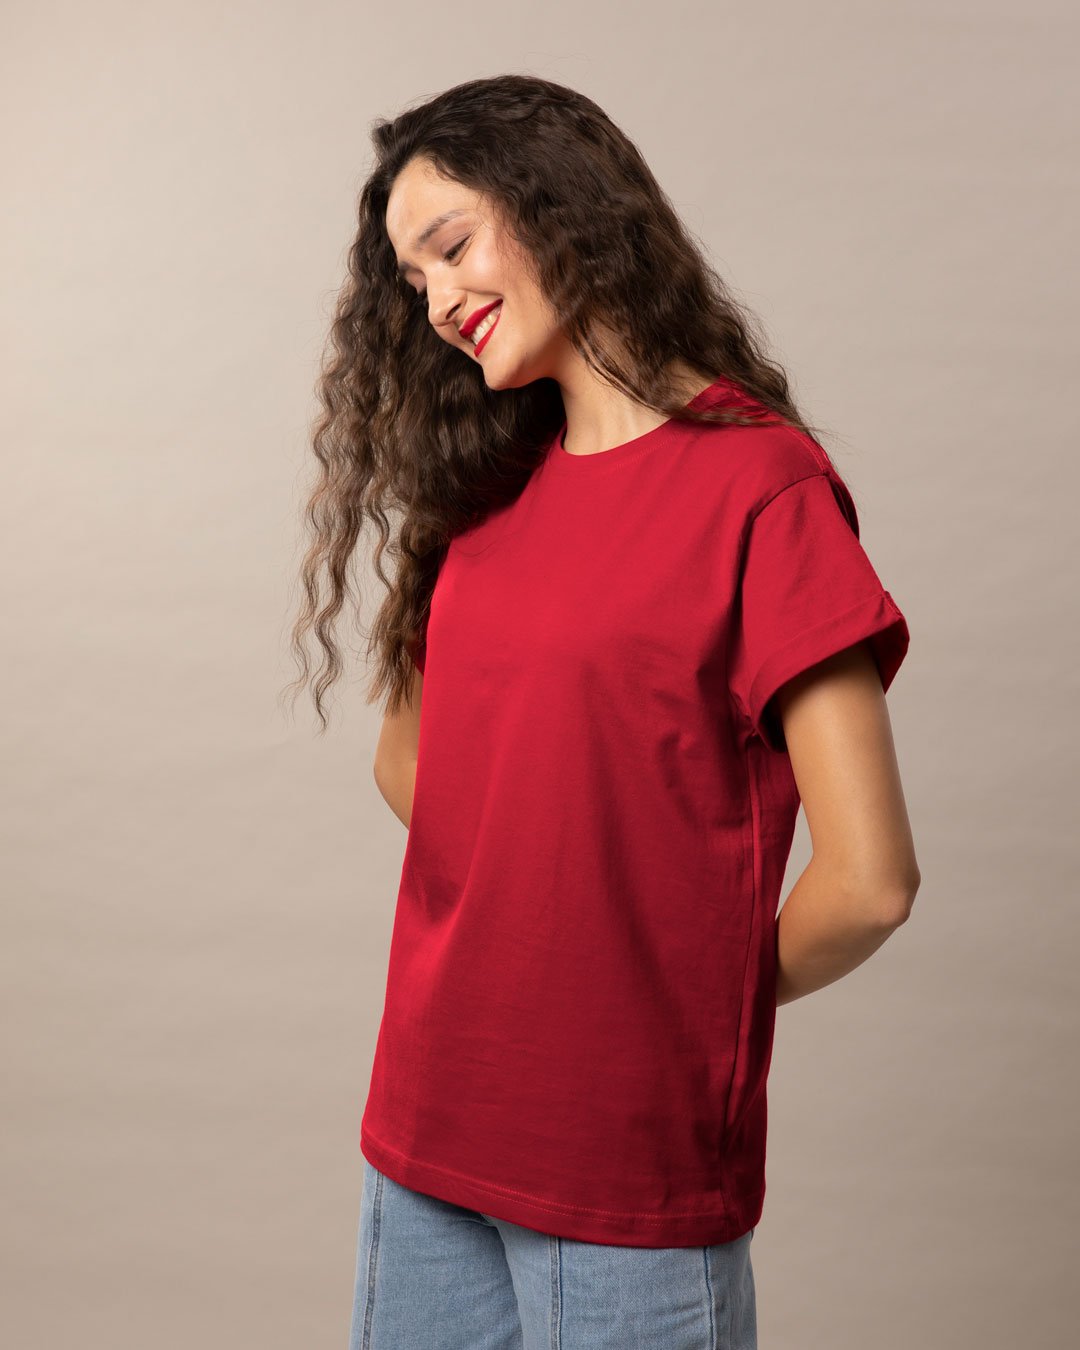 bold-red-boyfriend-t-shirt-women-s-plain-boyfriend-t-shirts-170465-1530354175 for her Strong Red